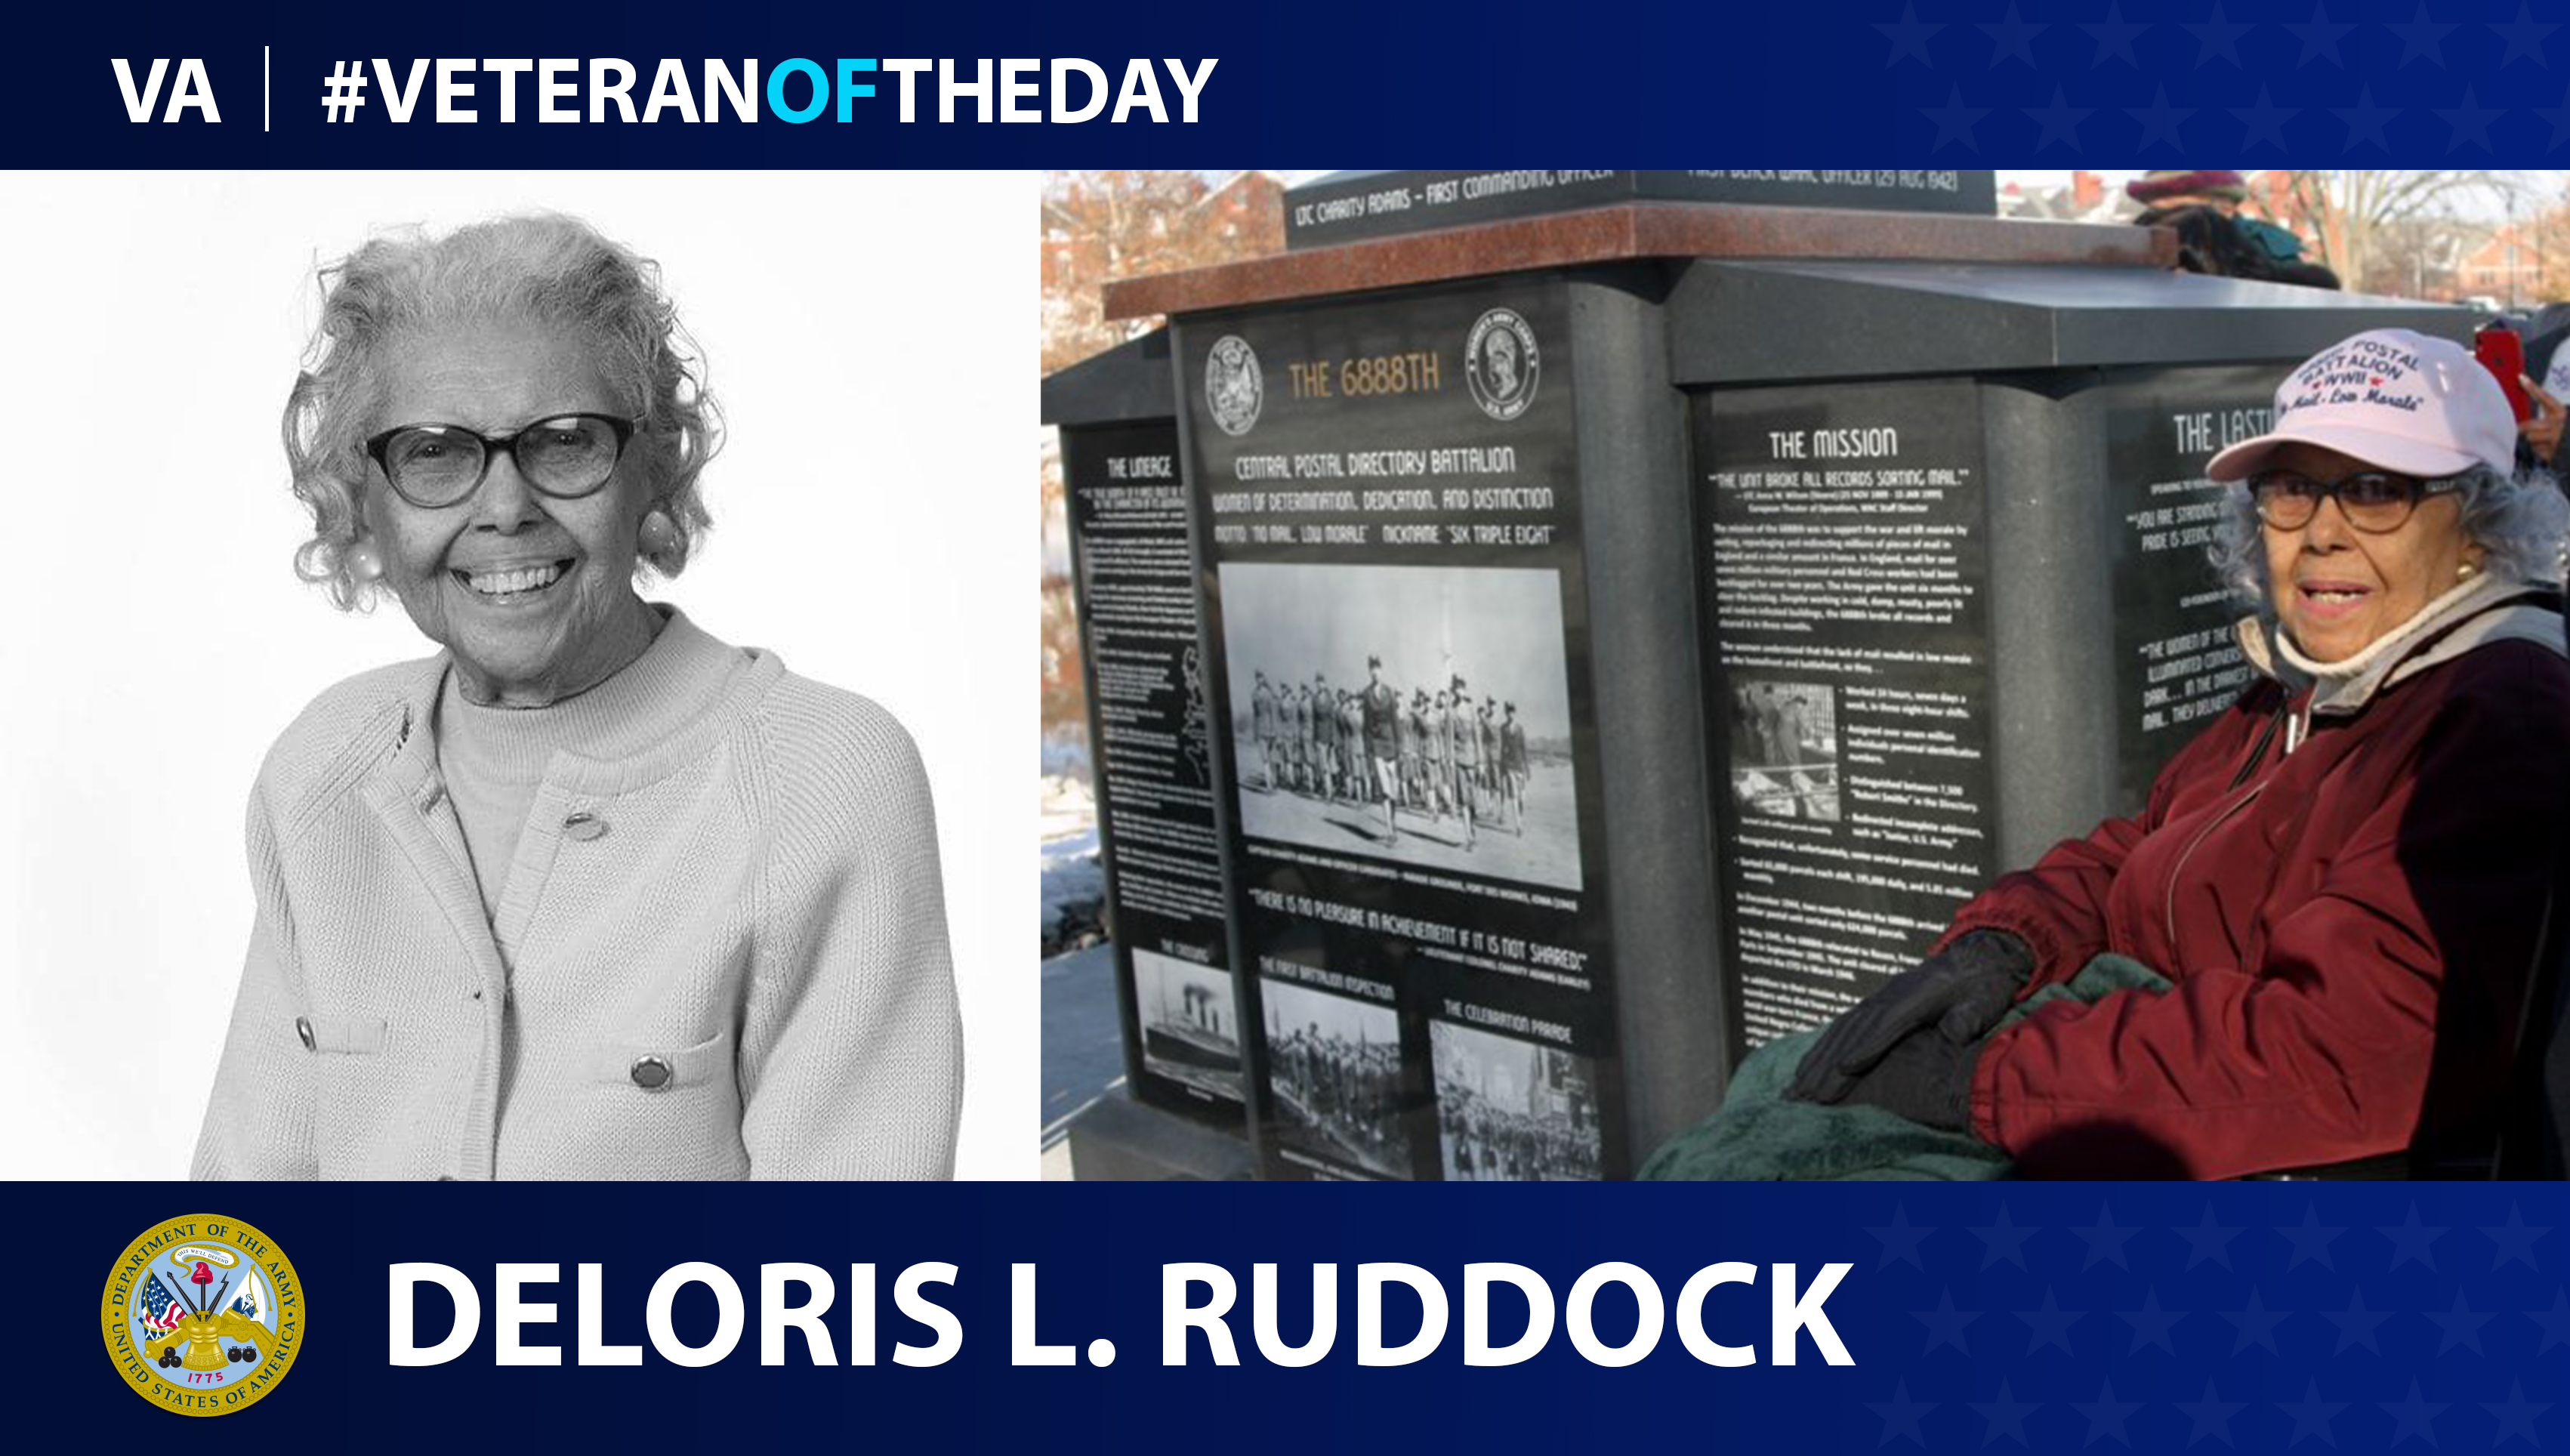 Army Veteran Deloris Ruddock is today's Veteran of the day.